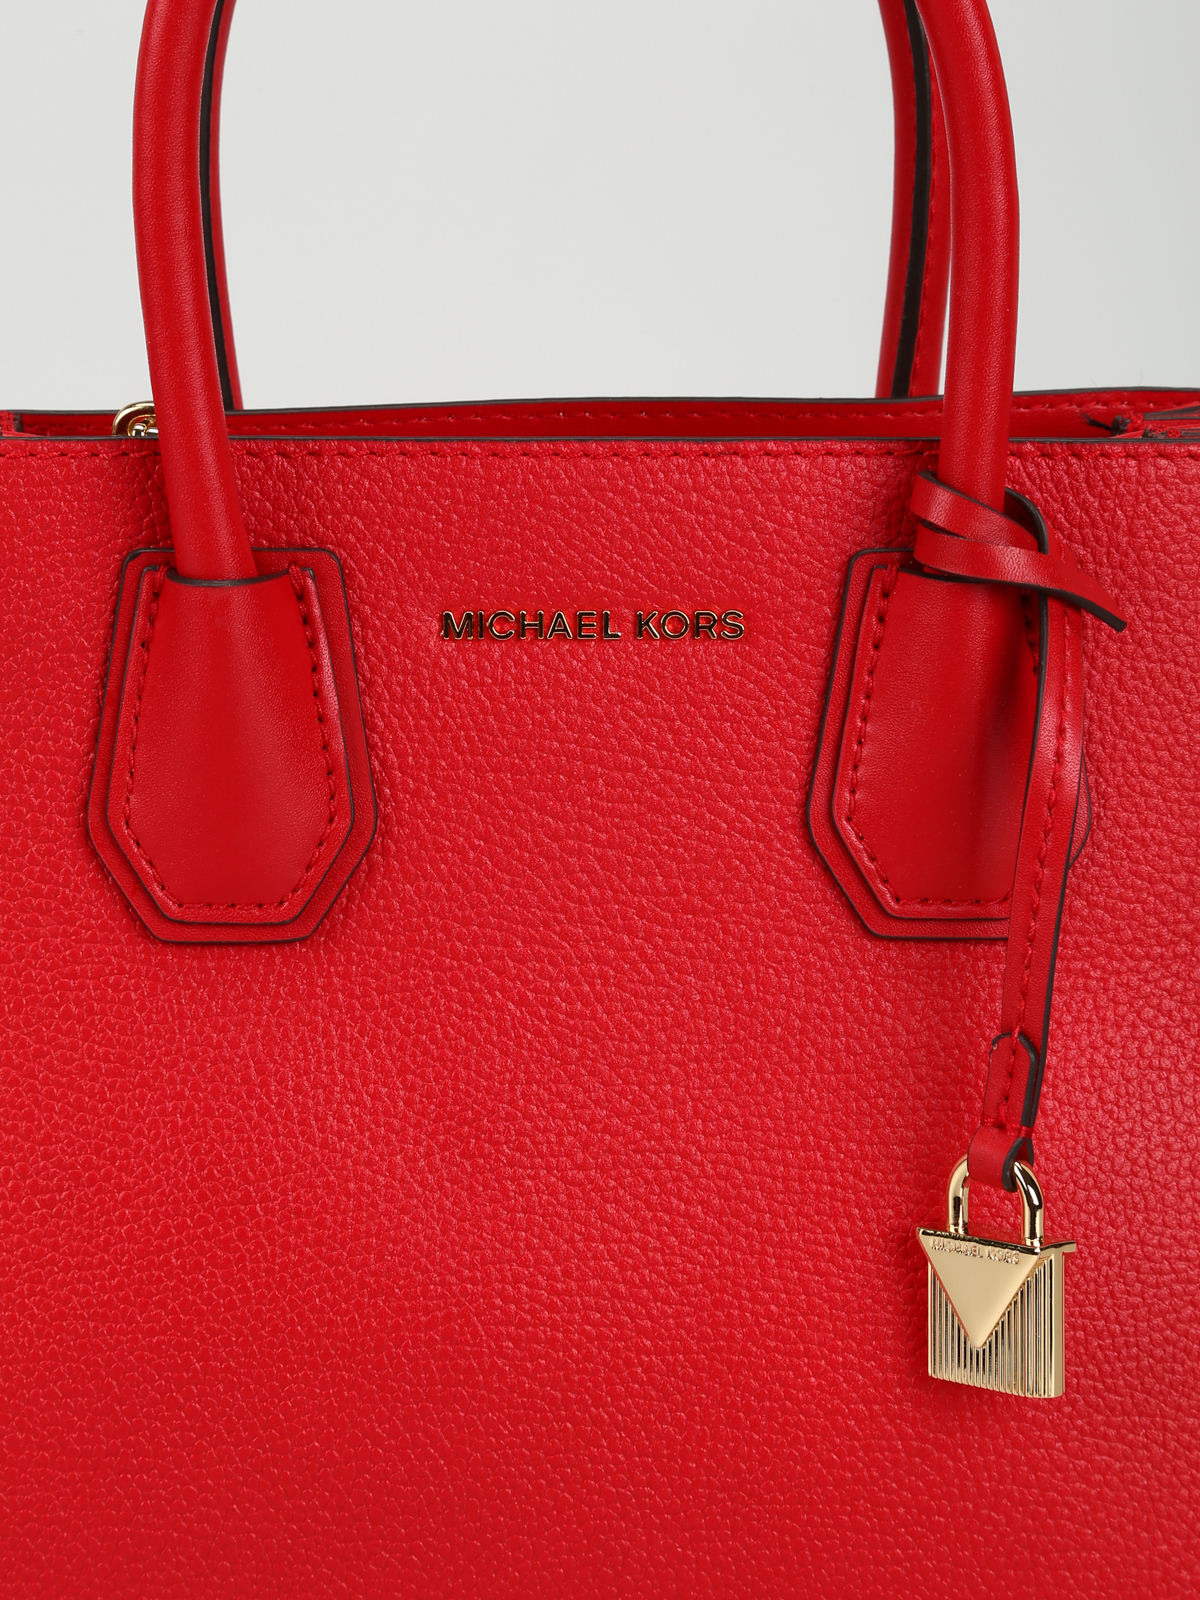 michael kors red crossbody purse